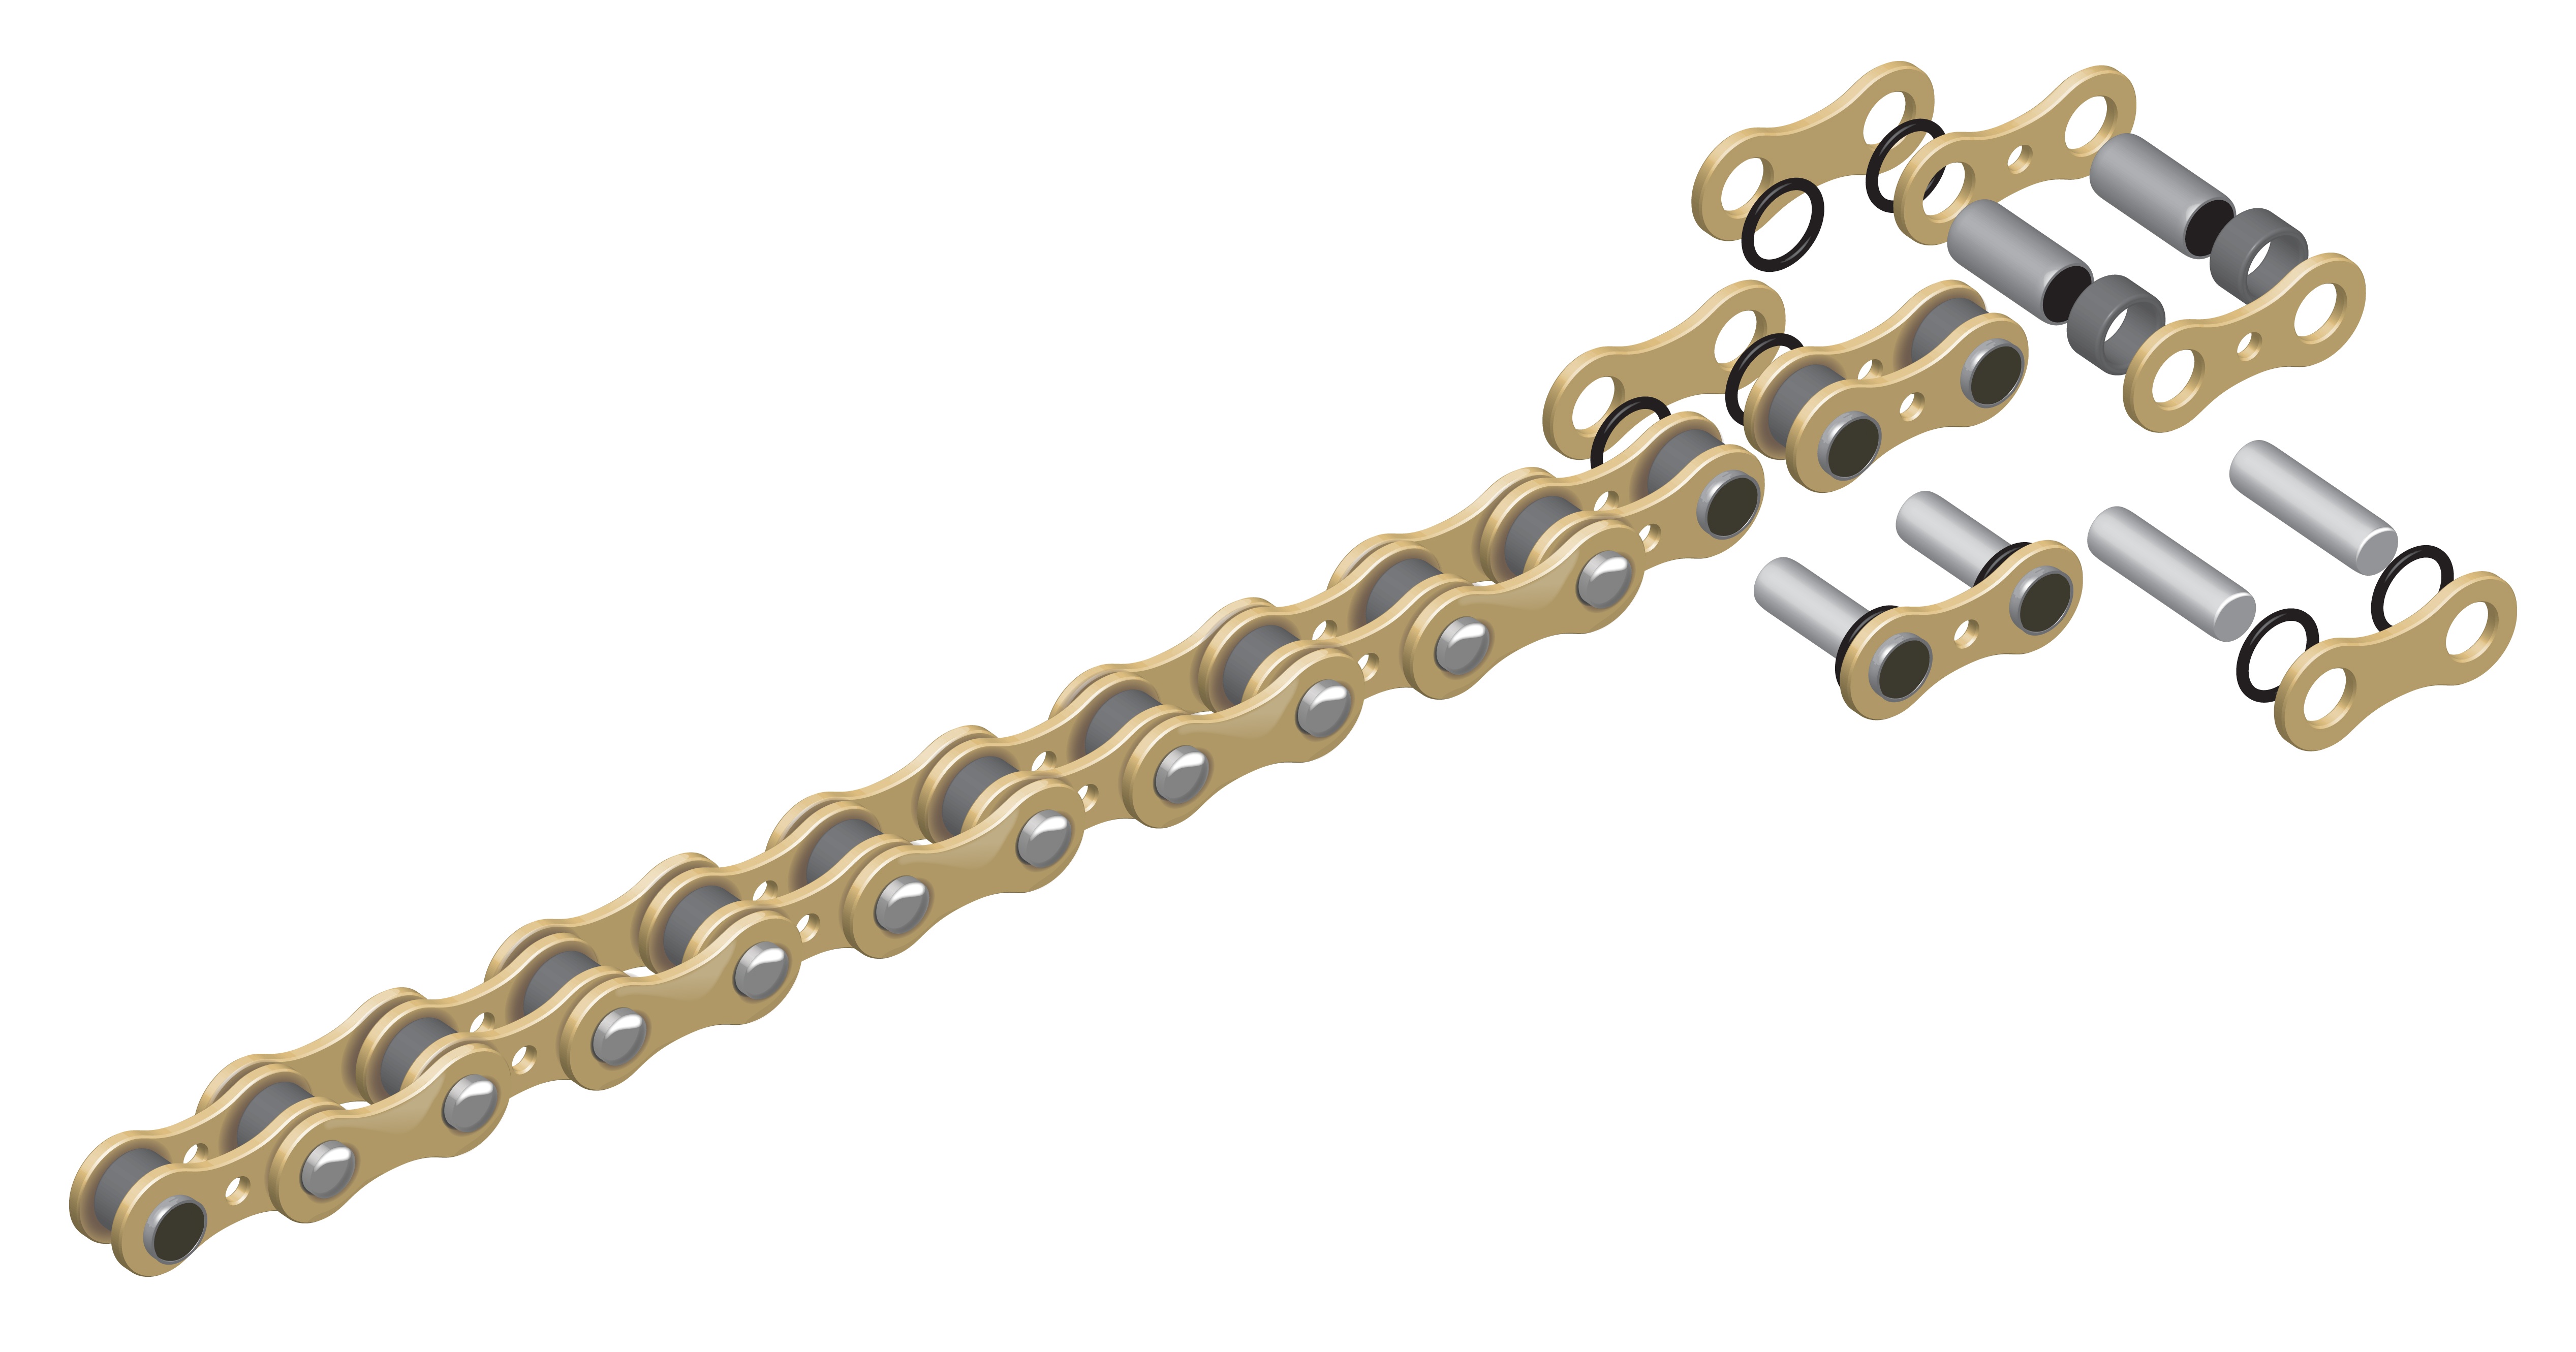 Jt o-ring chain gb428hpo/140 - 30,24 EUR